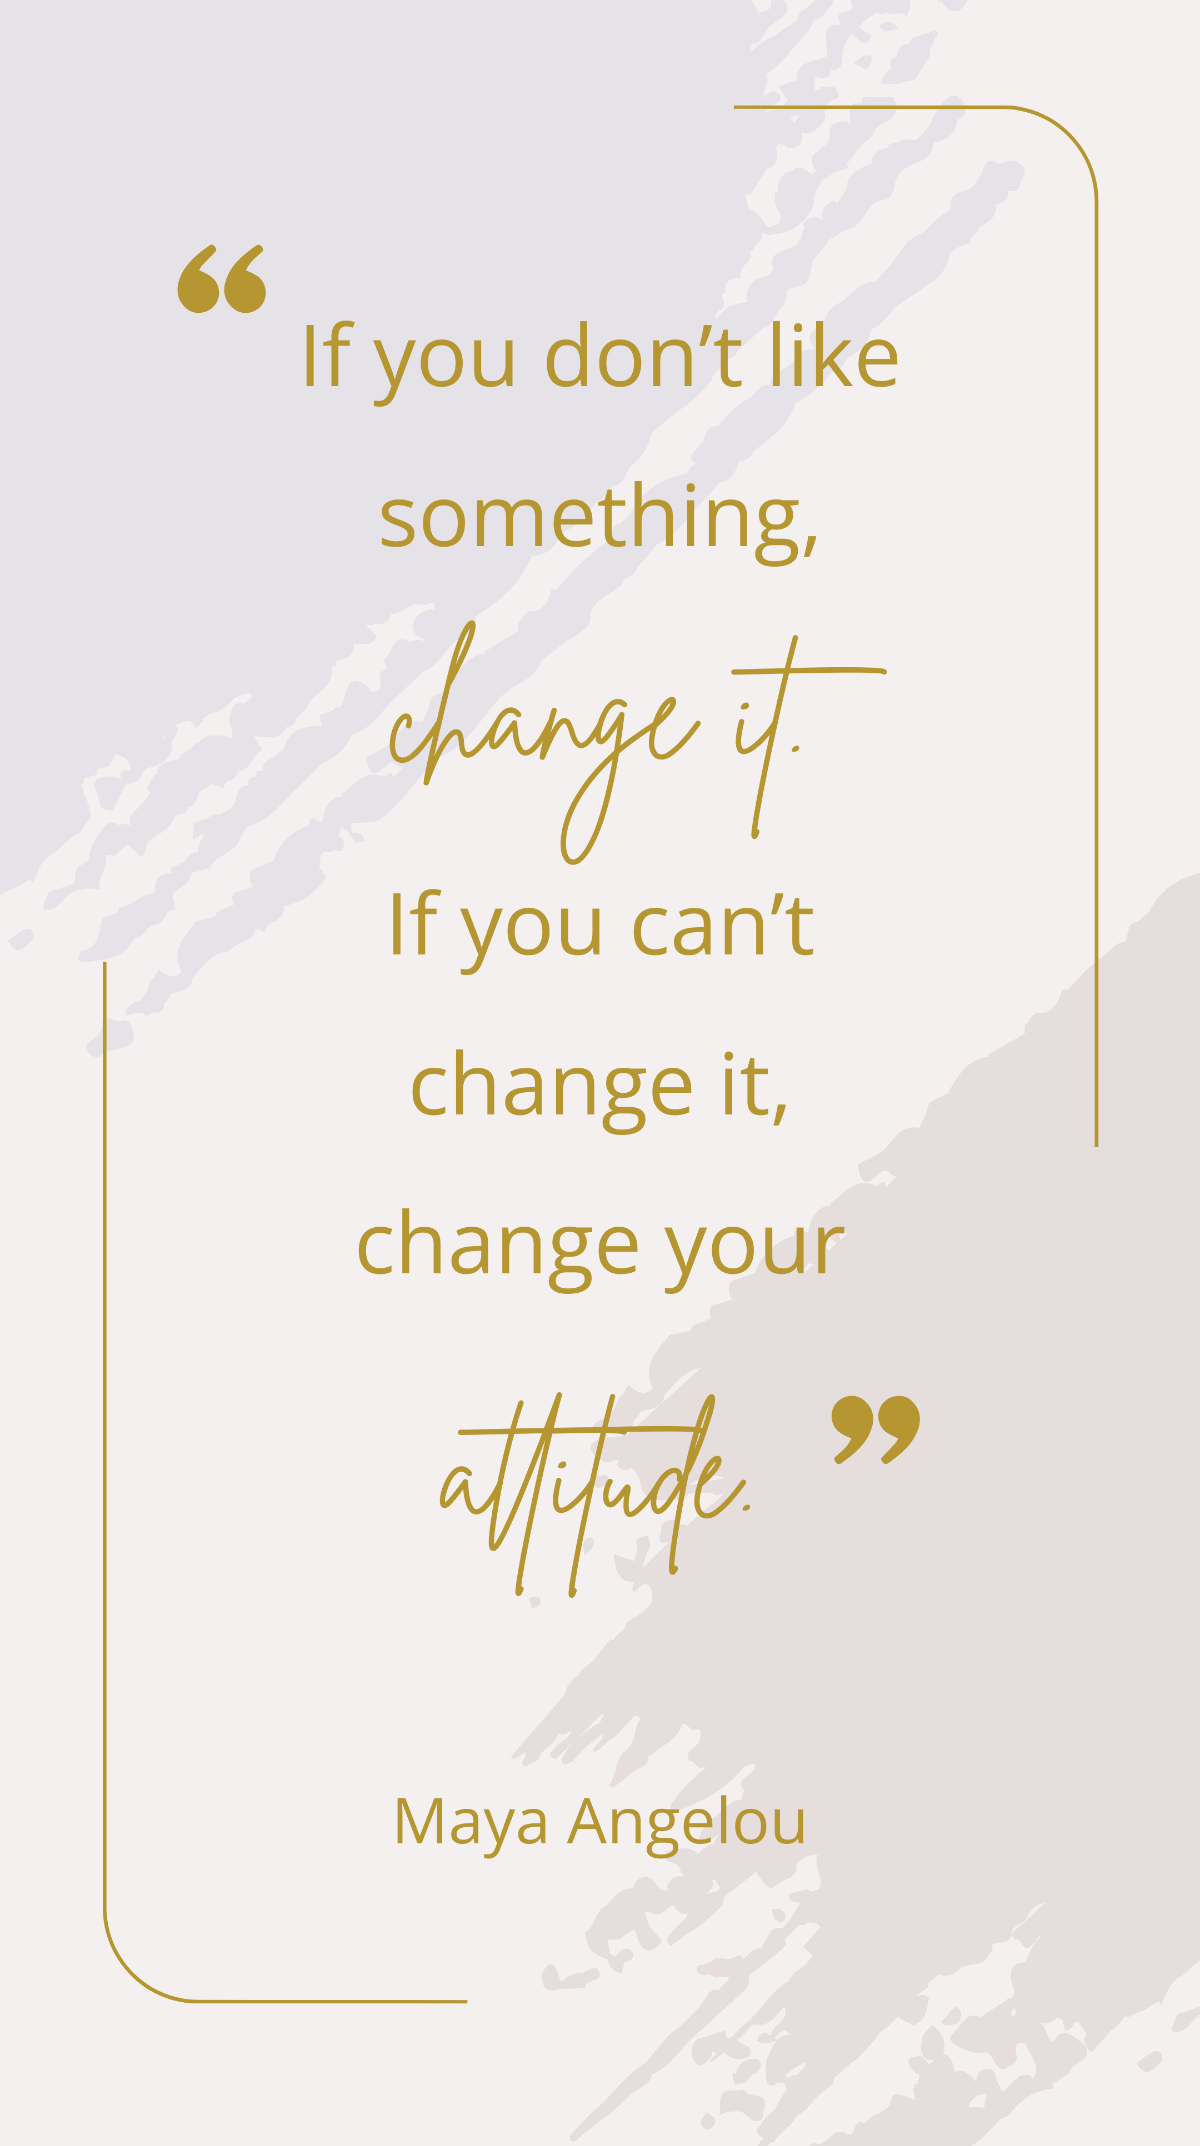 Maya Angelou - “If you don’t like something, change it. If you can’t change it, change your attitude.” Template